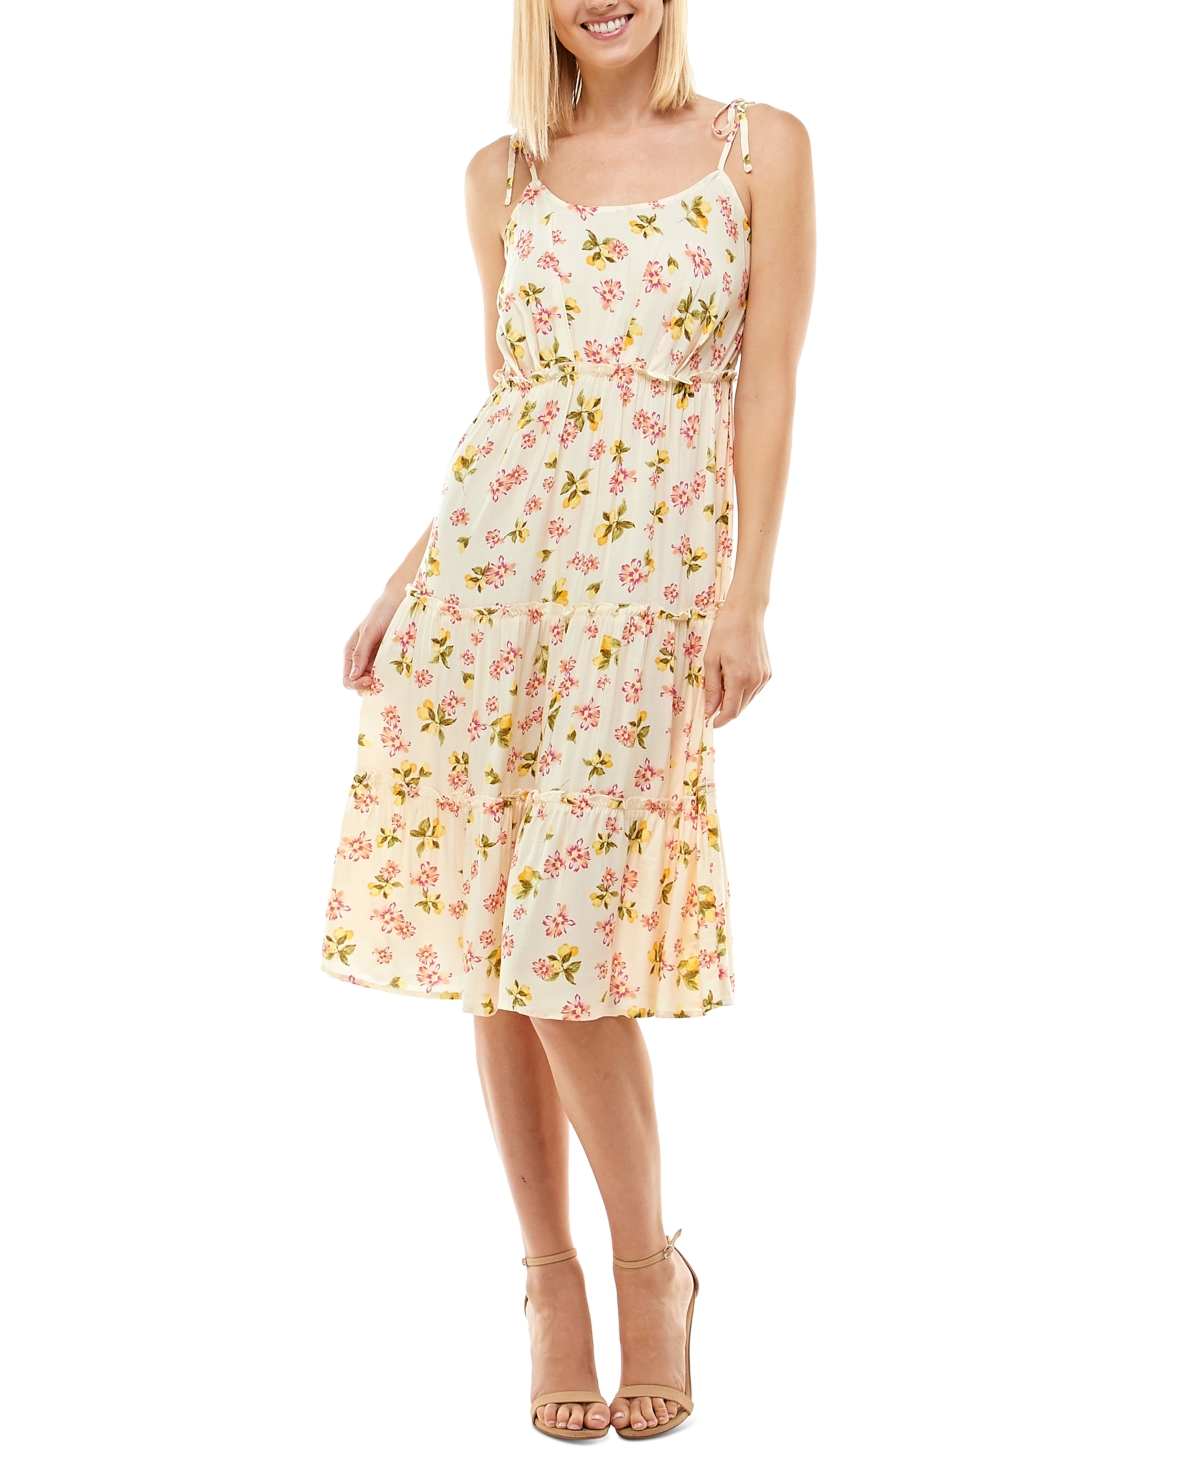 Juniors' Smocked Tiered Dress - Cream/Pink/Yellow